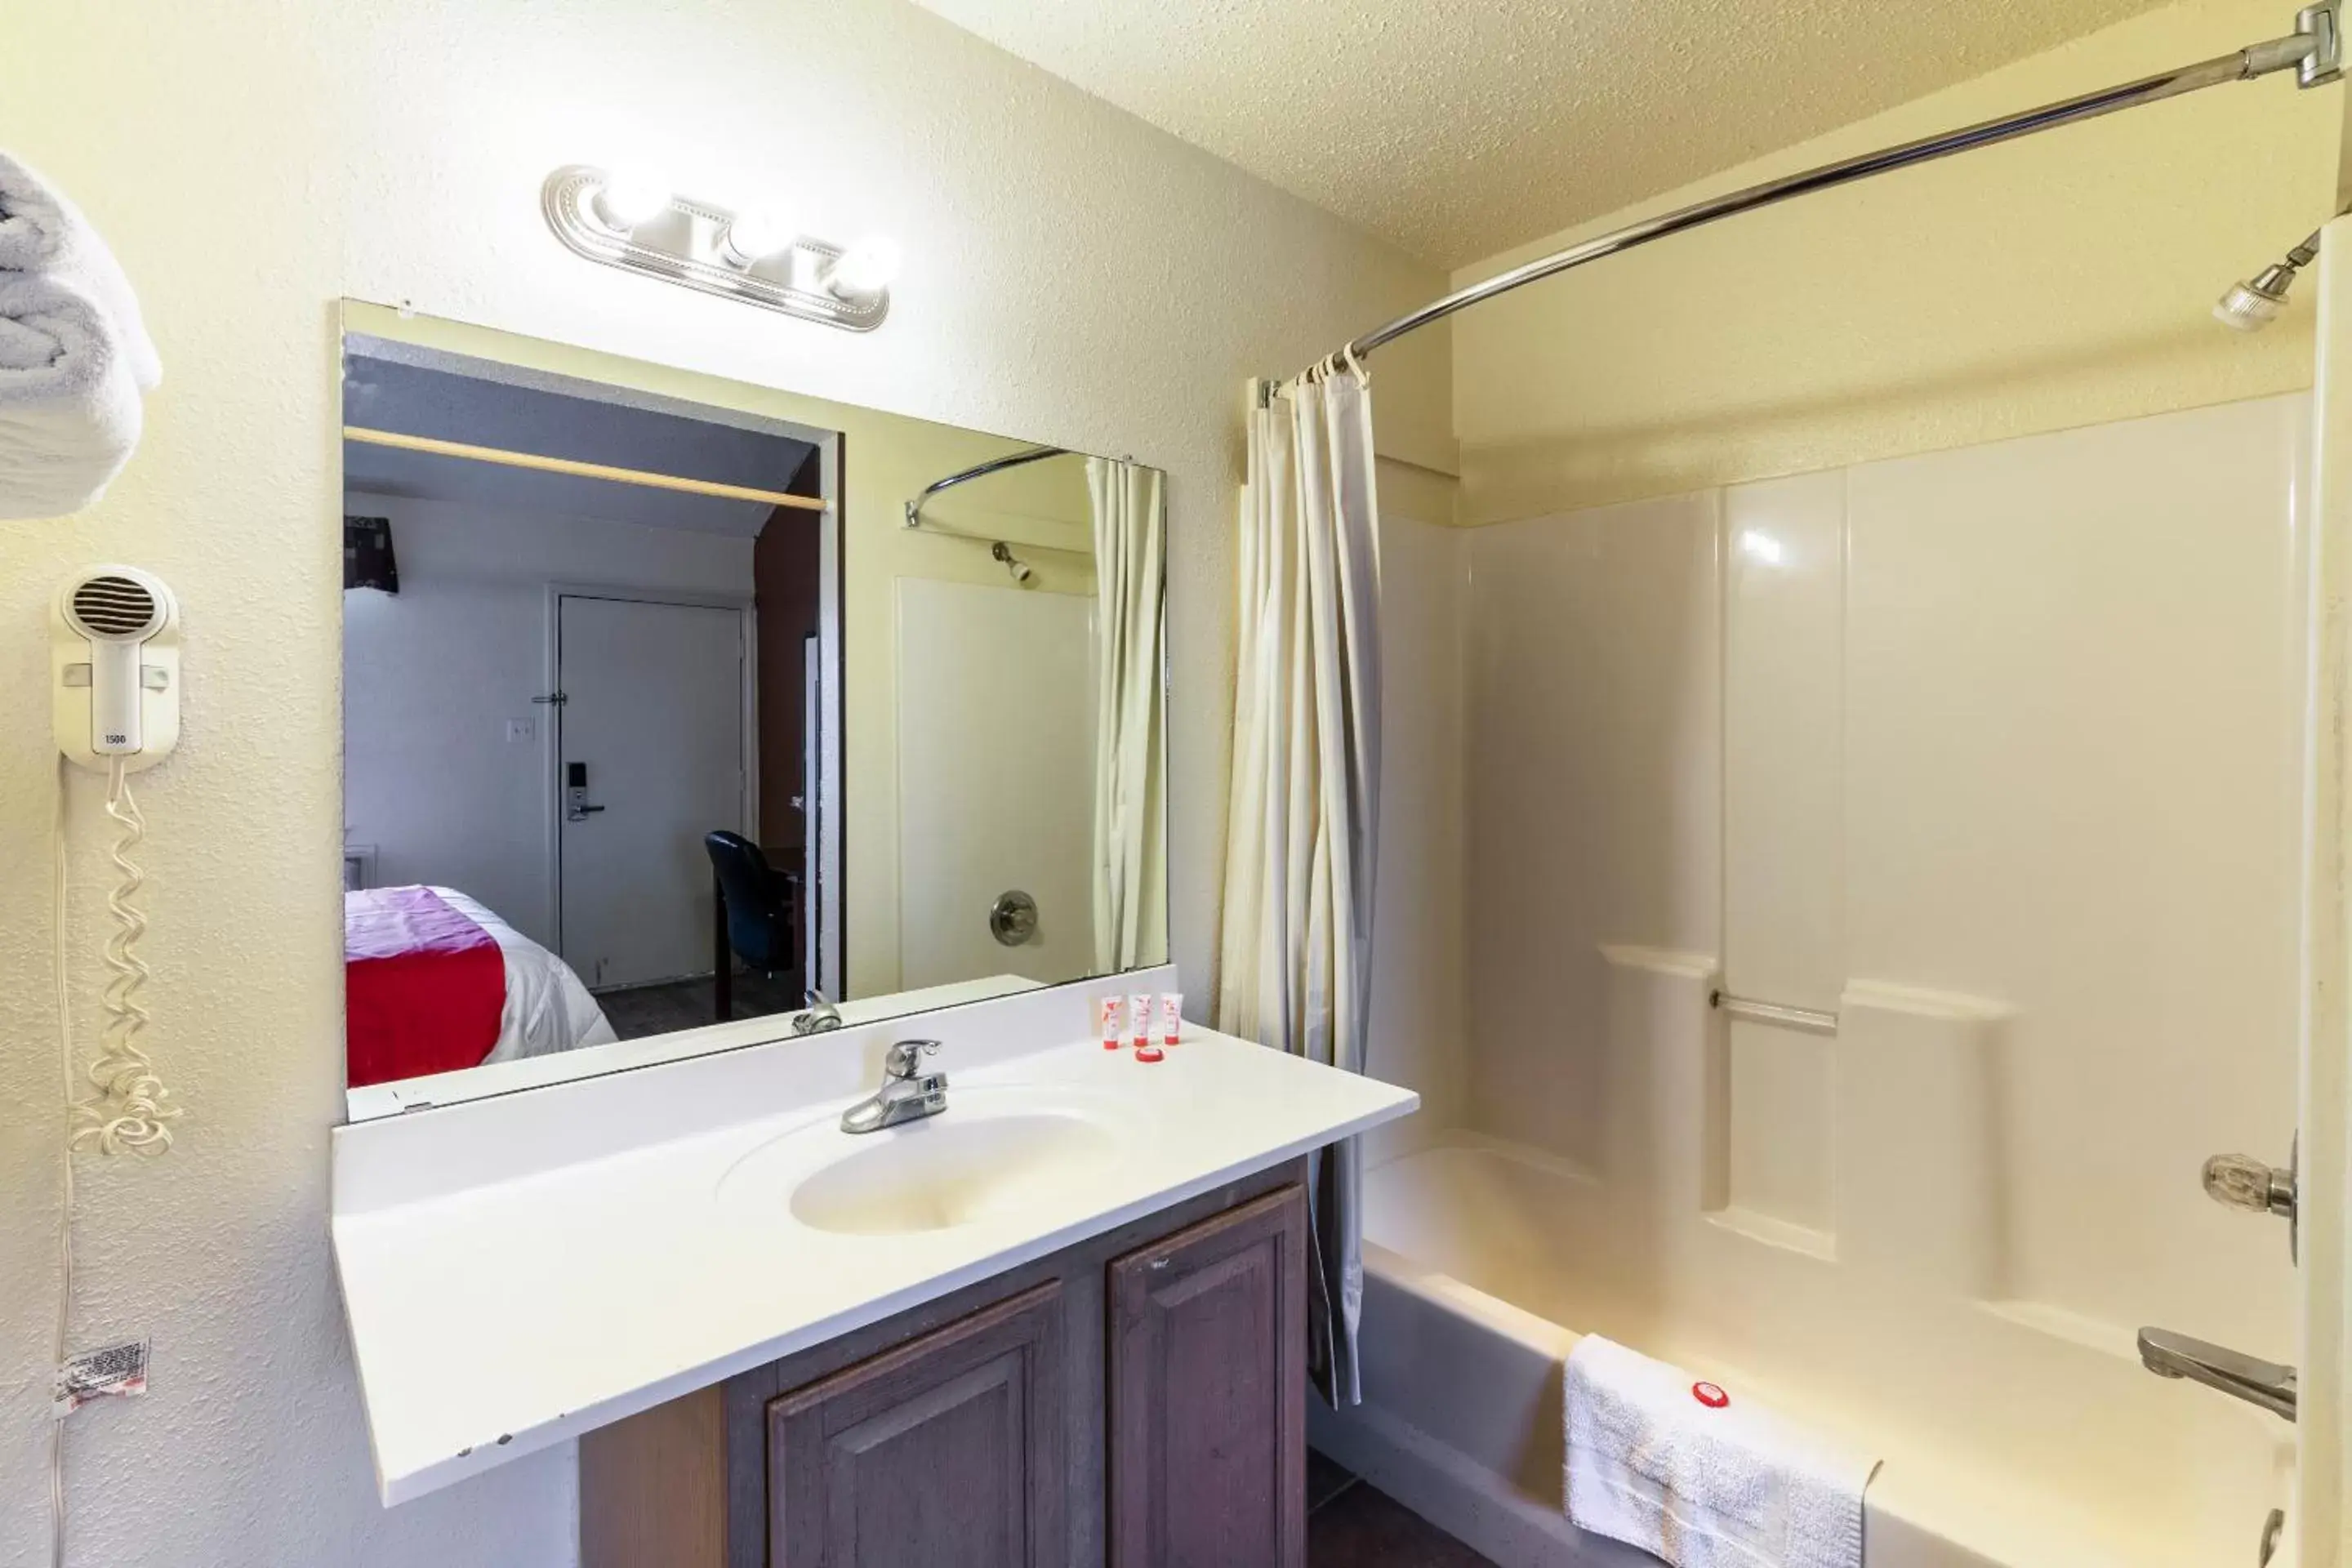 Area and facilities, Bathroom in OYO Hotel Decatur TX Hwy 287 Northwest